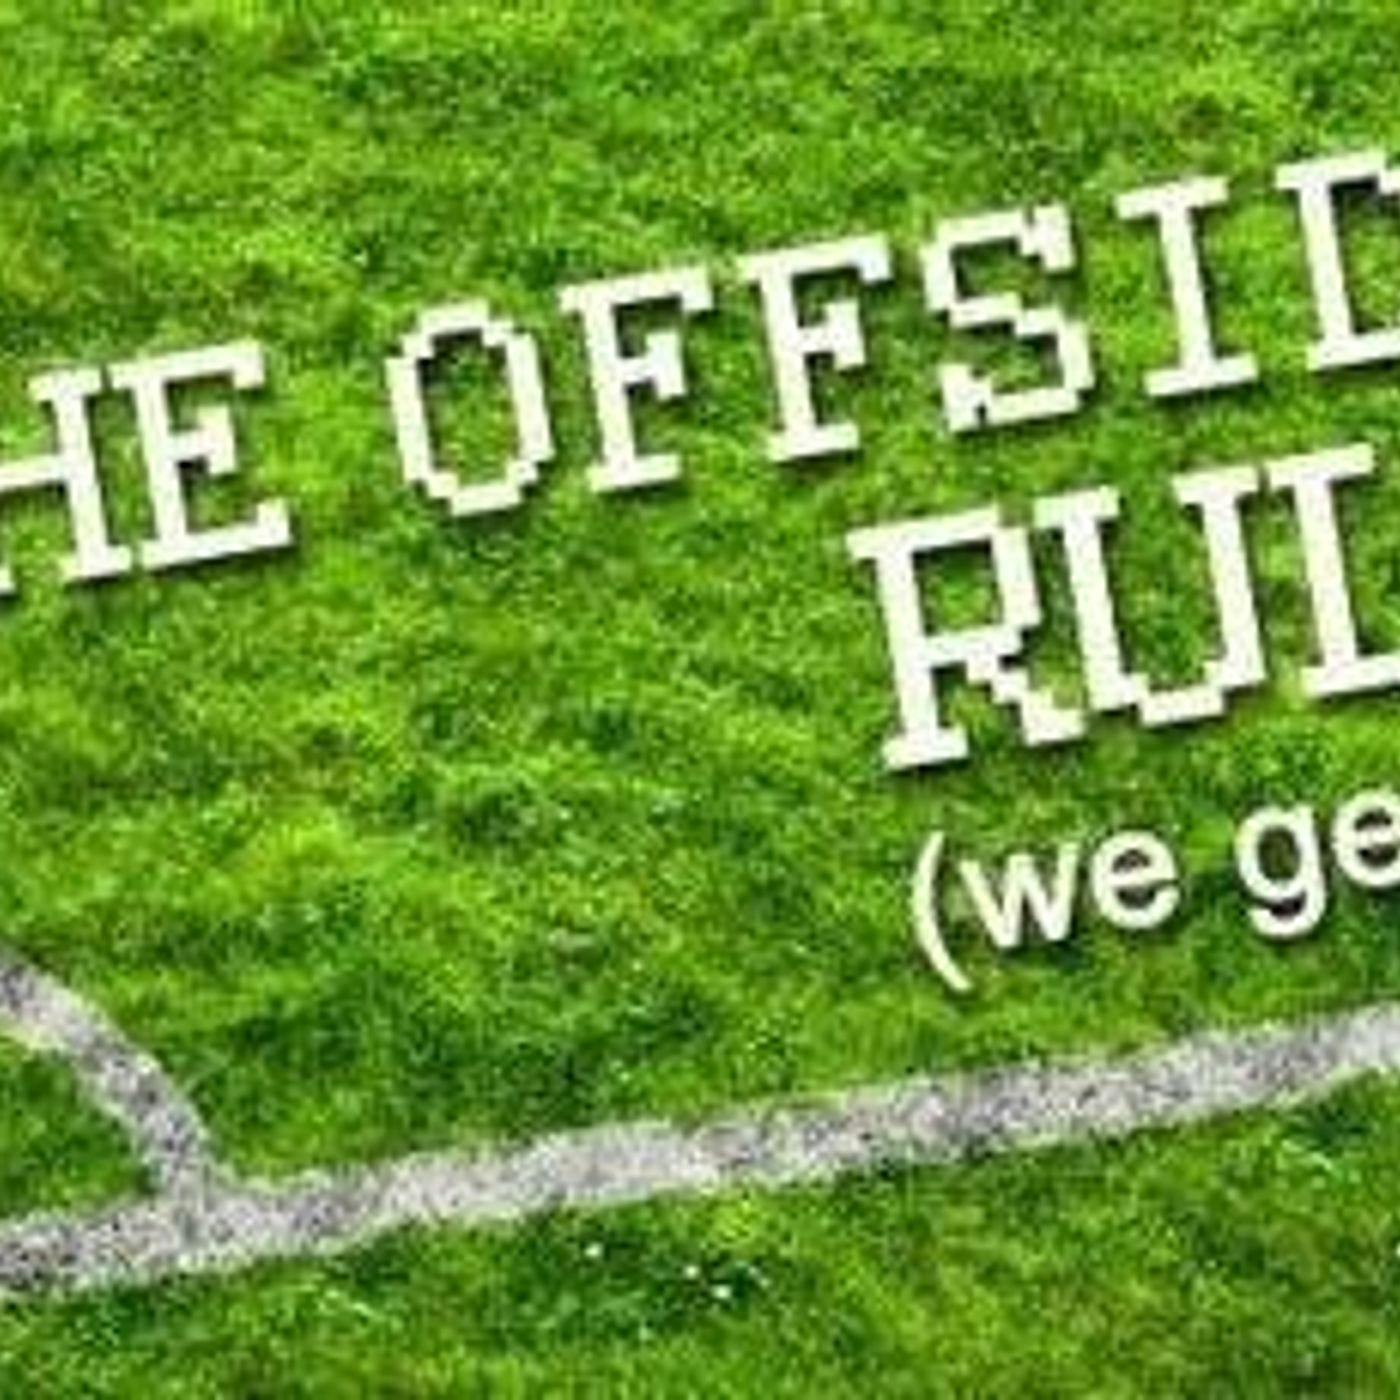 The Offside Rule 2013/14 Episode 19